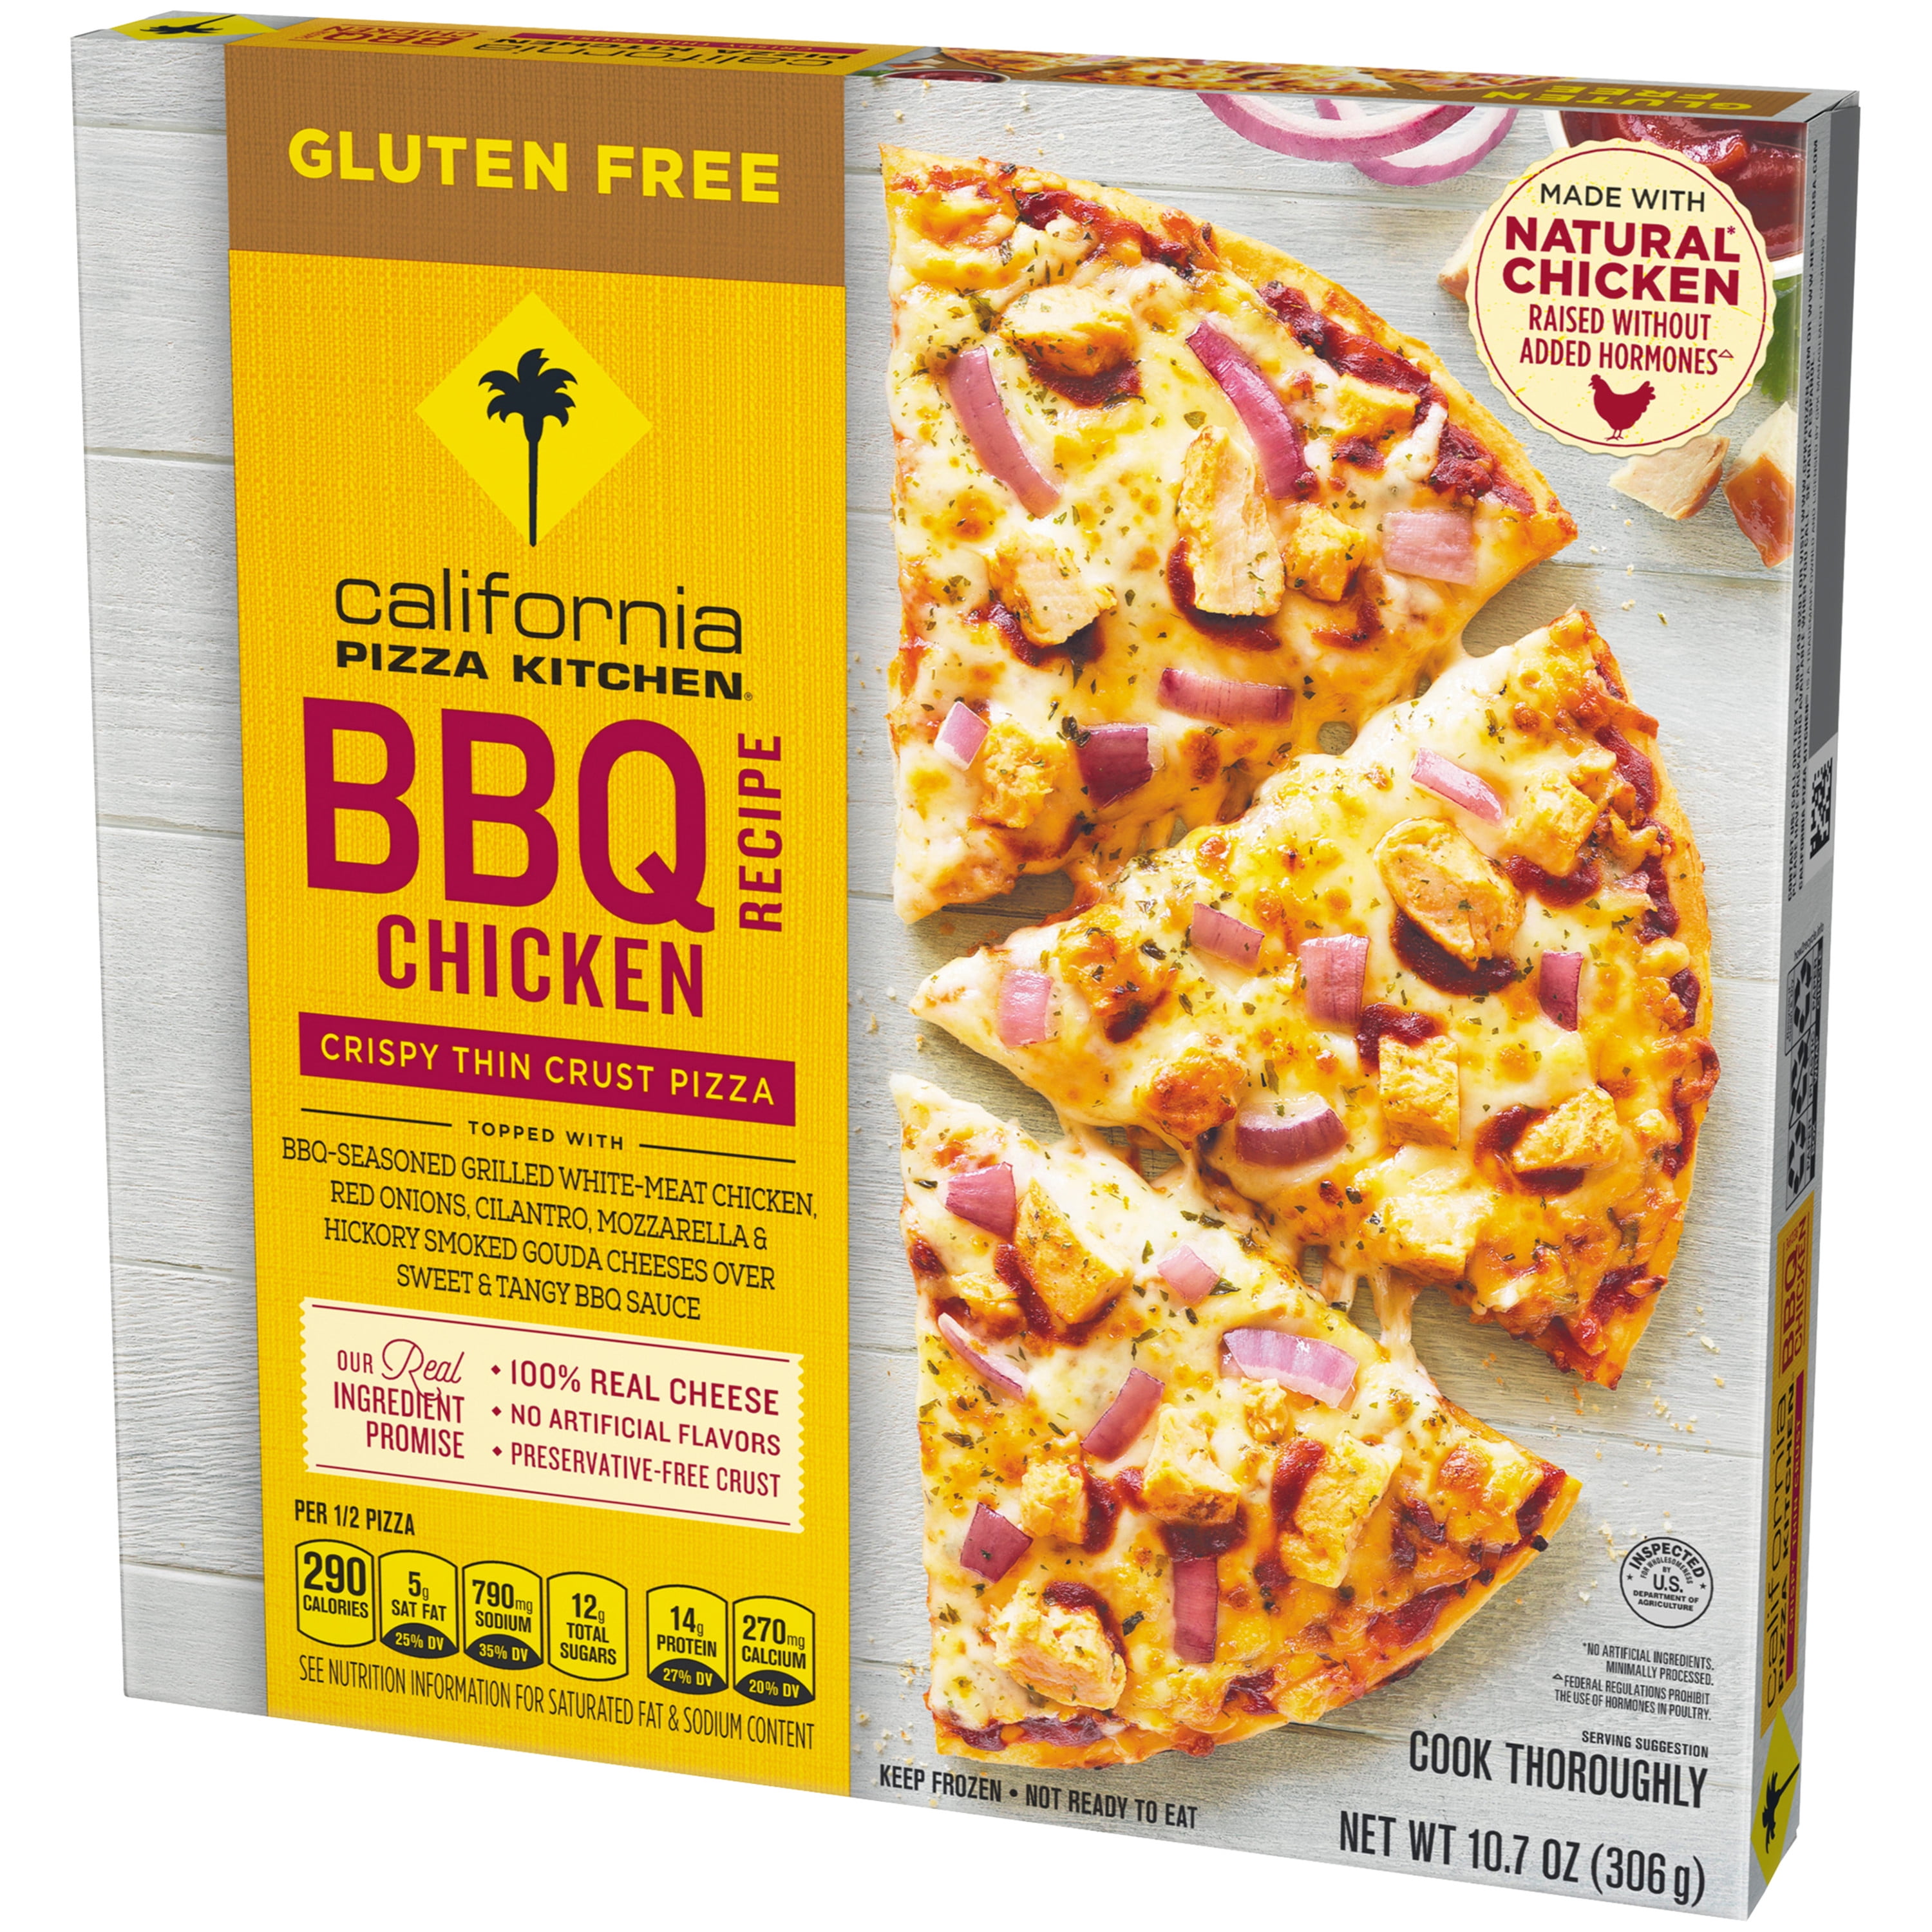 California Pizza Kitchen Gluten Free Bbq Recipe Chicken Crispy Thin Crust Pizza Walmartcom Walmartcom